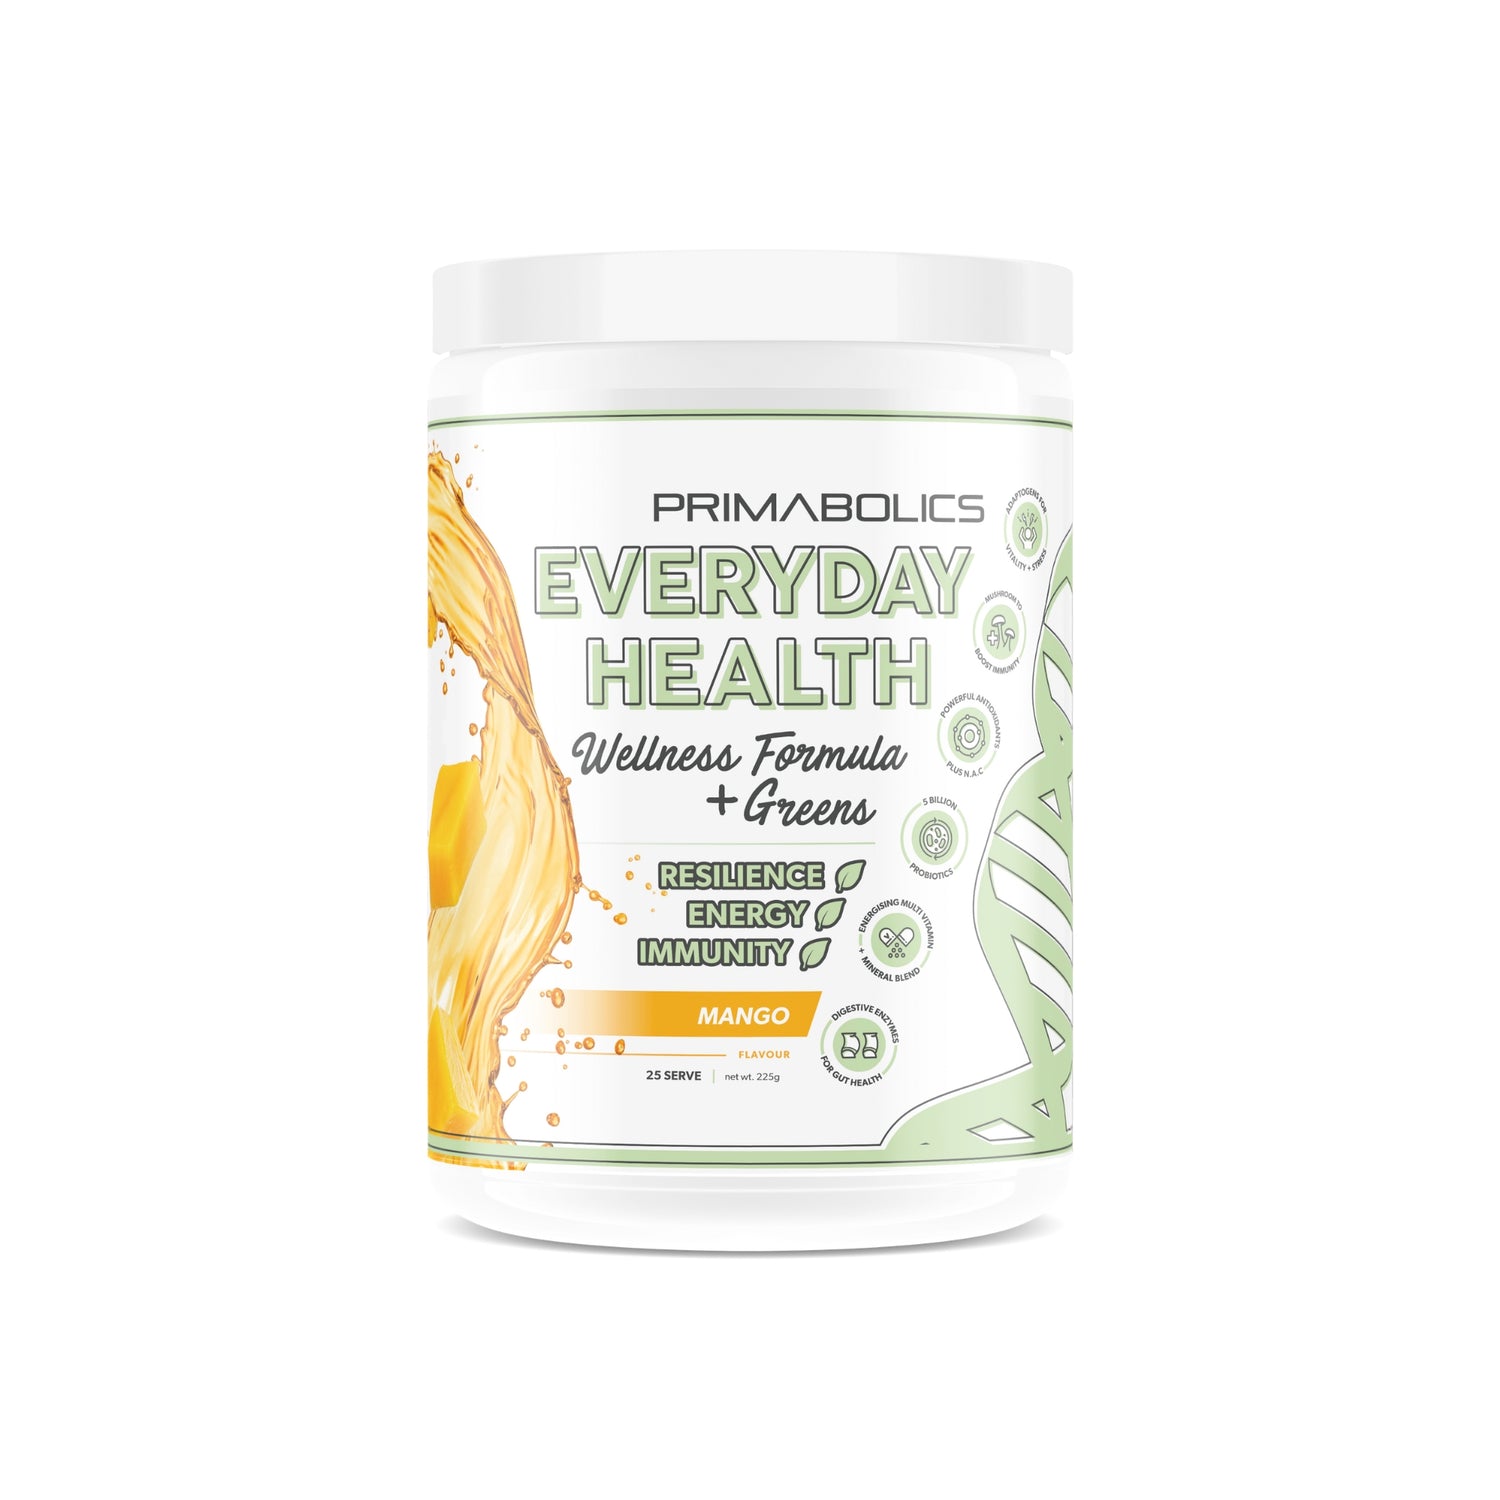 Primabolics Everyday Health Wellness Formula + Greens Powder